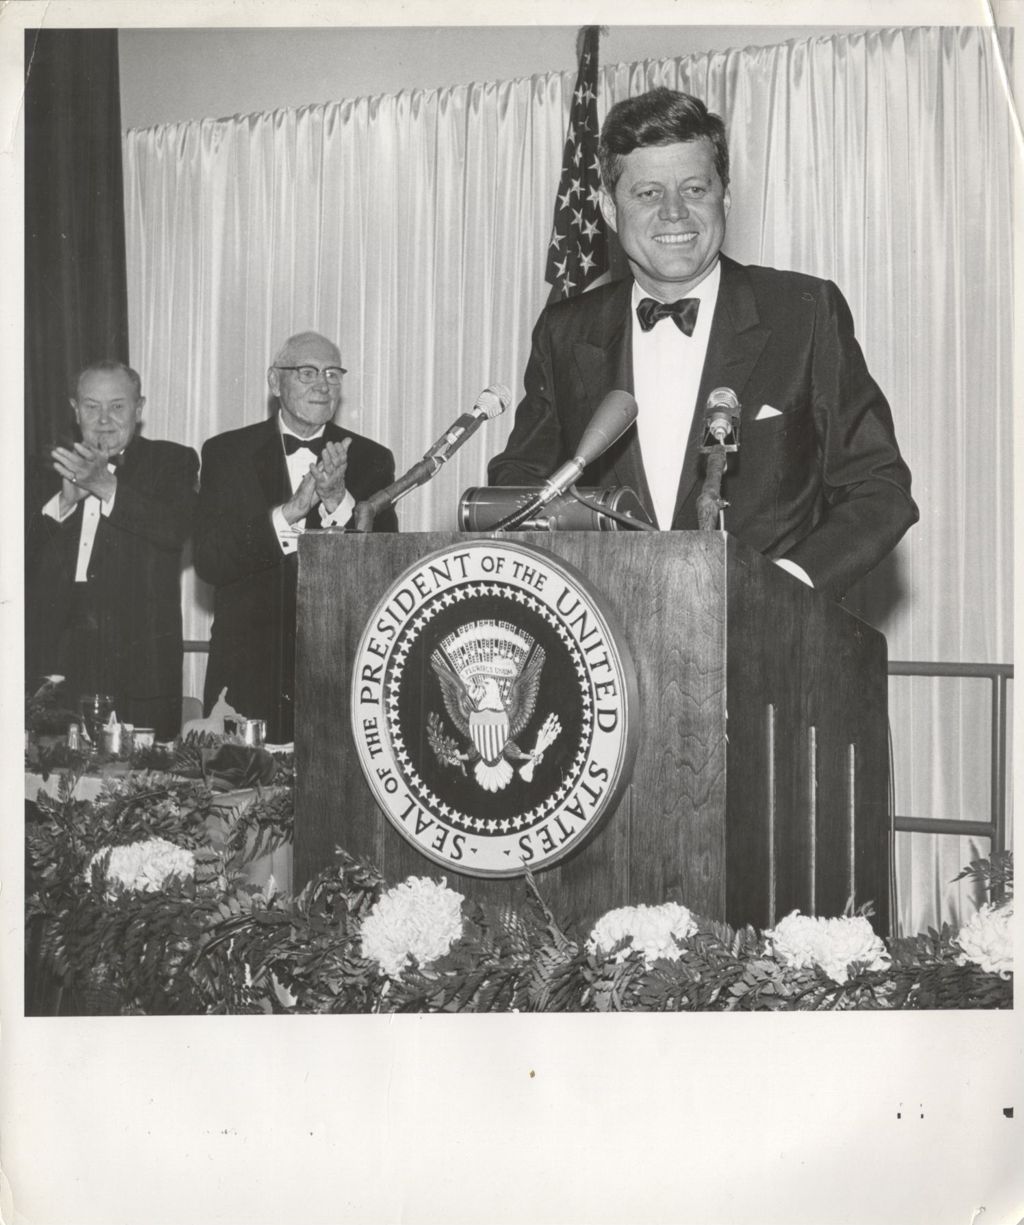 Miniature of President John F. Kennedy speaks at Democratic fundraising dinner